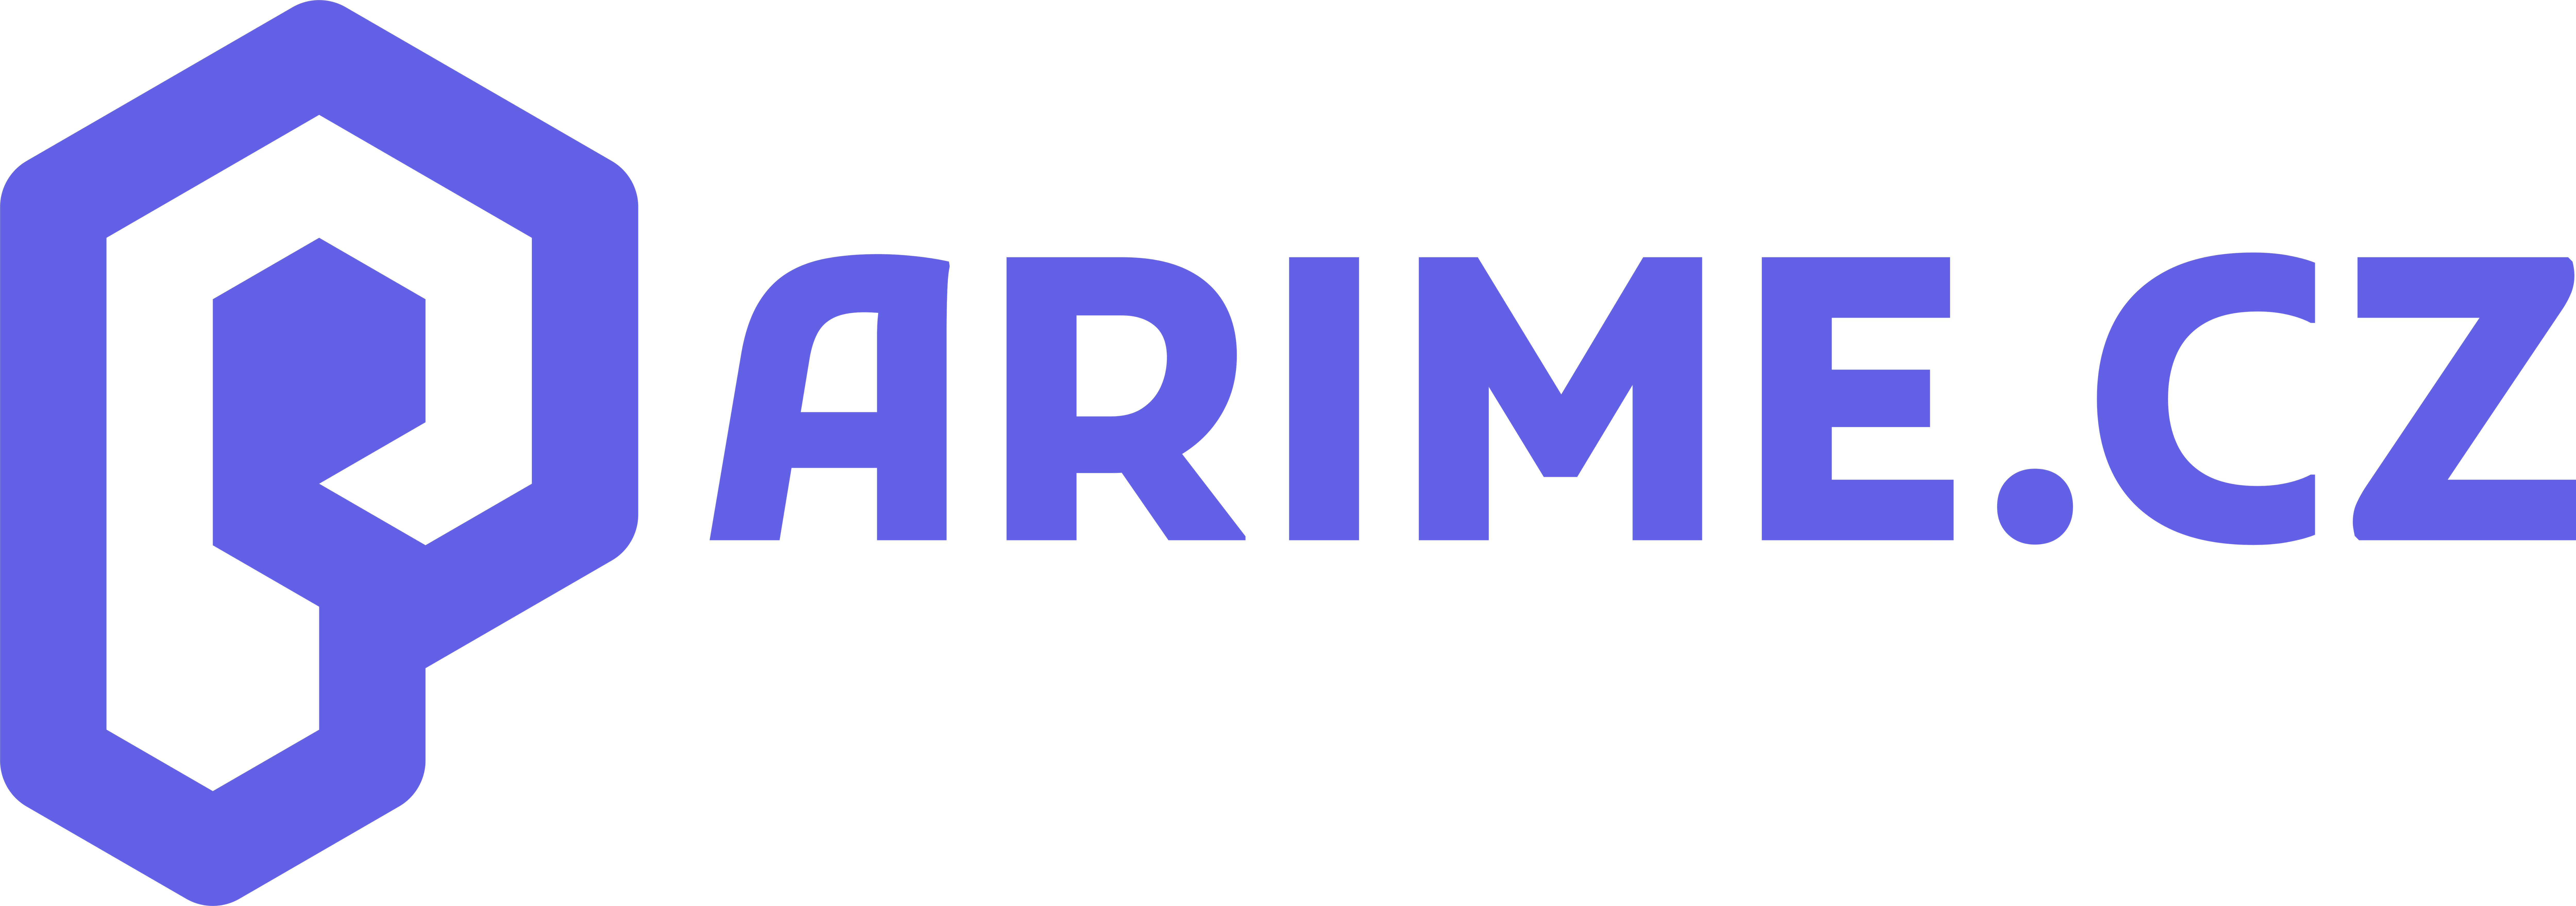 Paříme.cz - Minecraft hosting